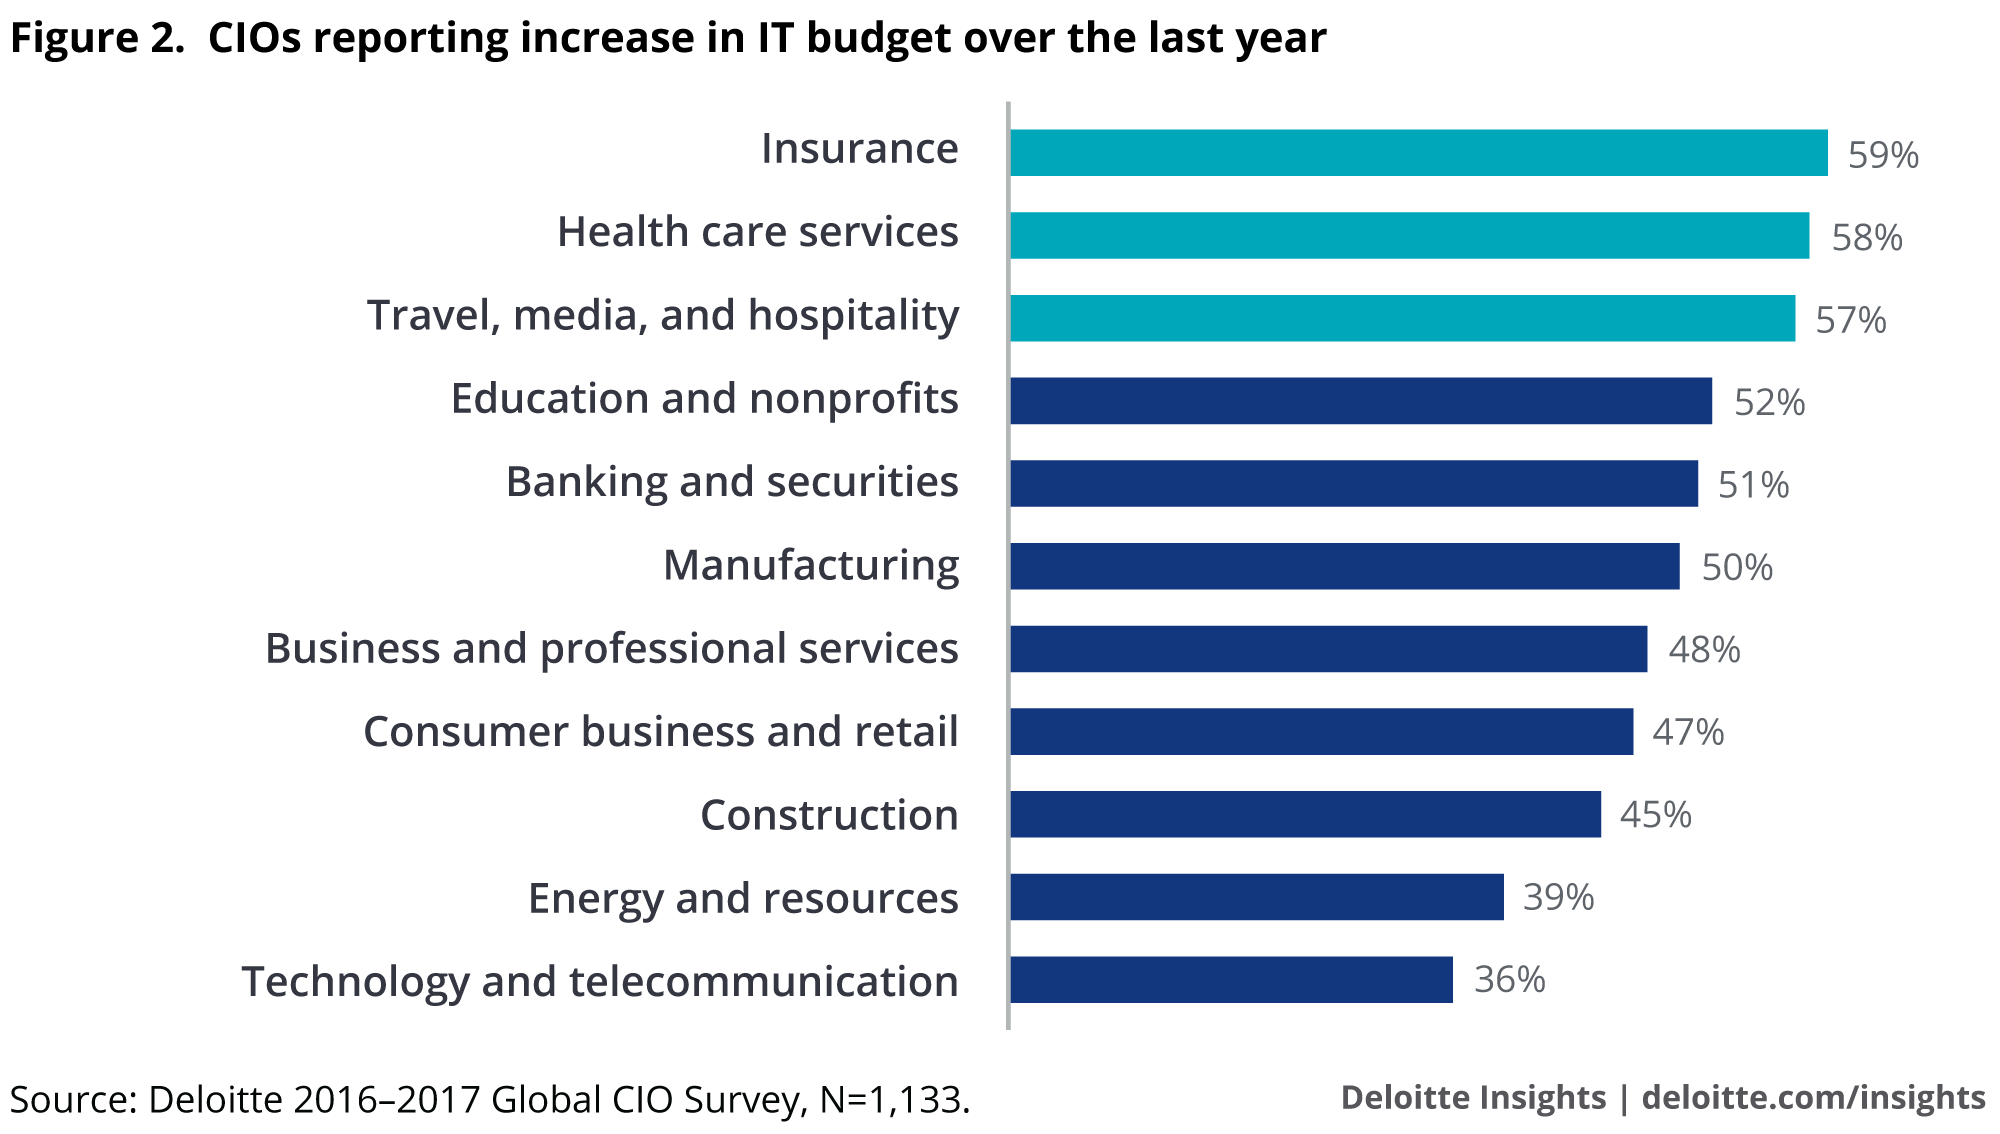 Deloitte 2016-2017 Global CIO Survey IT Budget Increases